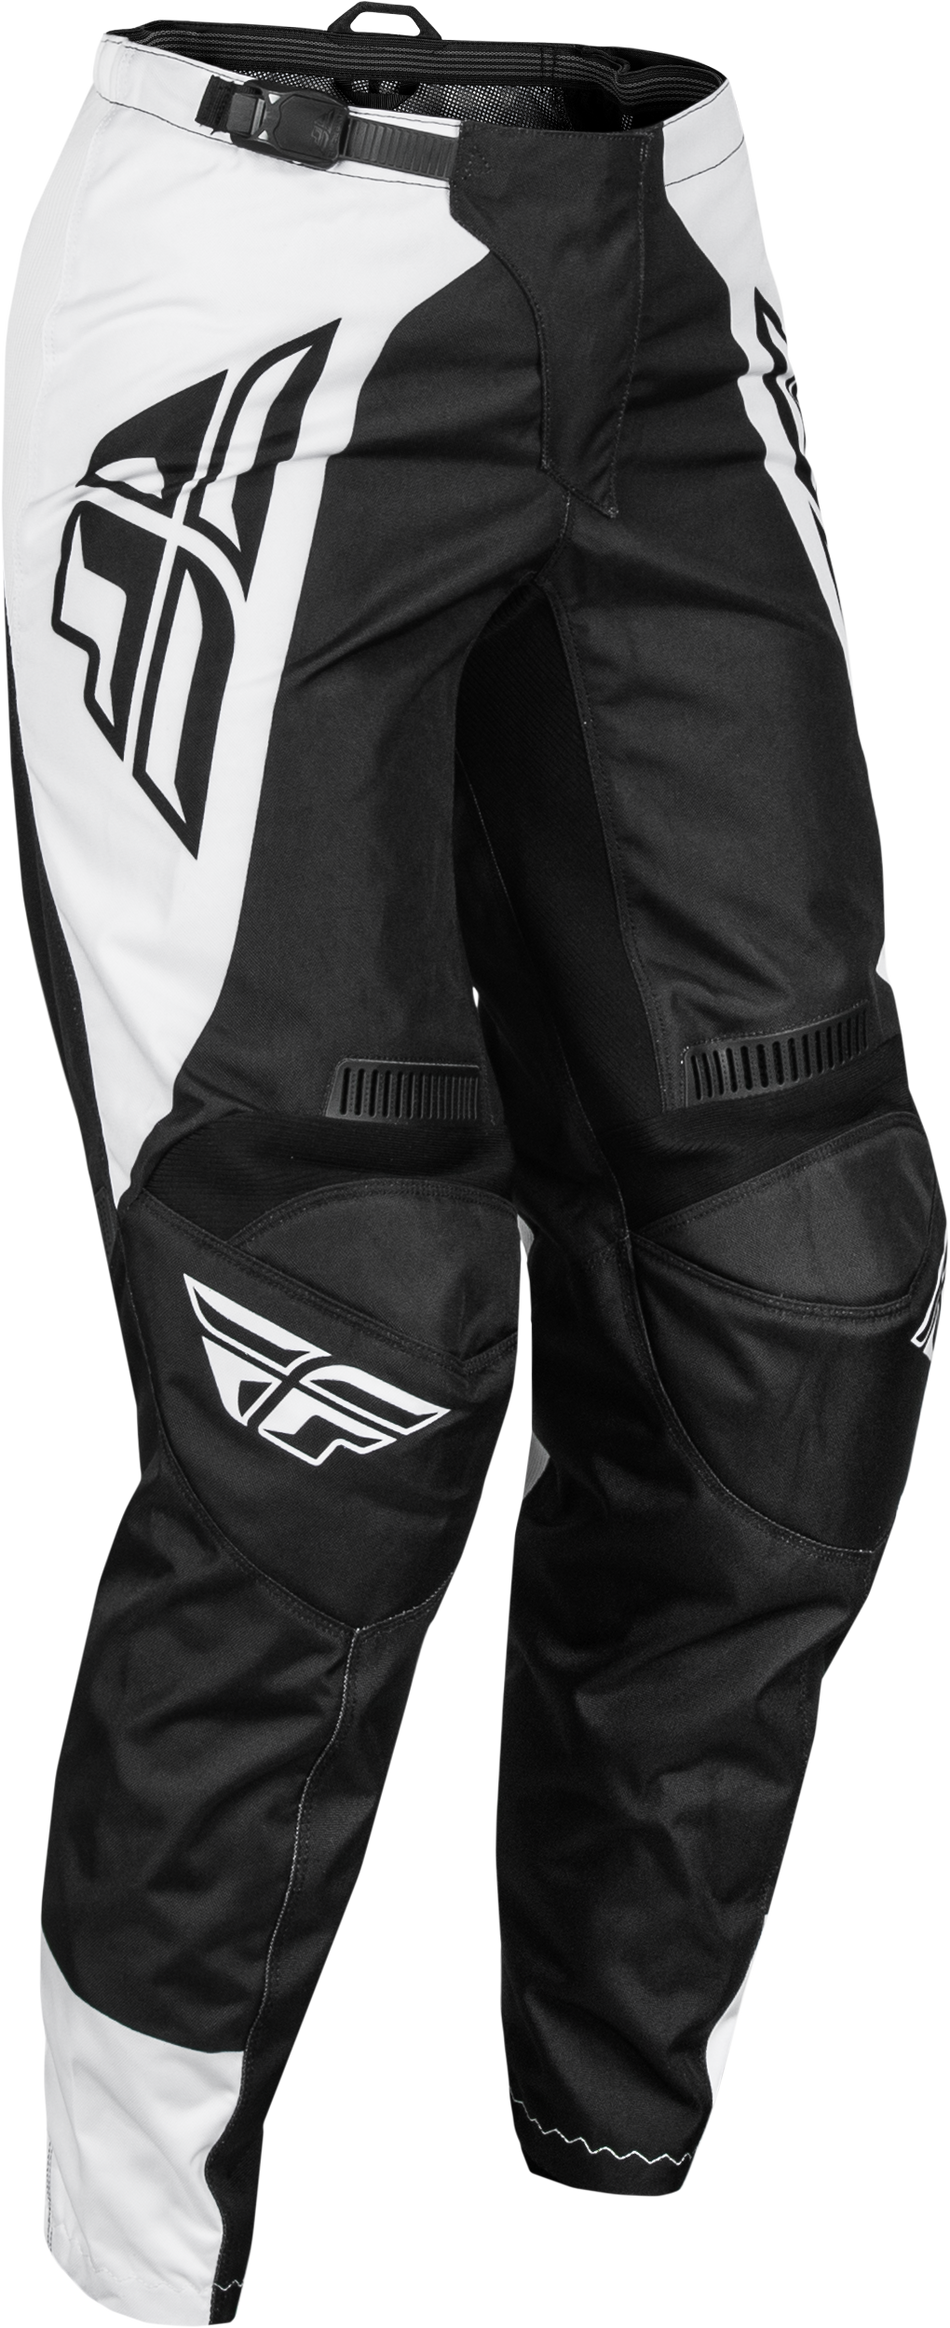 FLY RACING Women's F-16 Pants Black/White Sz 11/12 377-83211